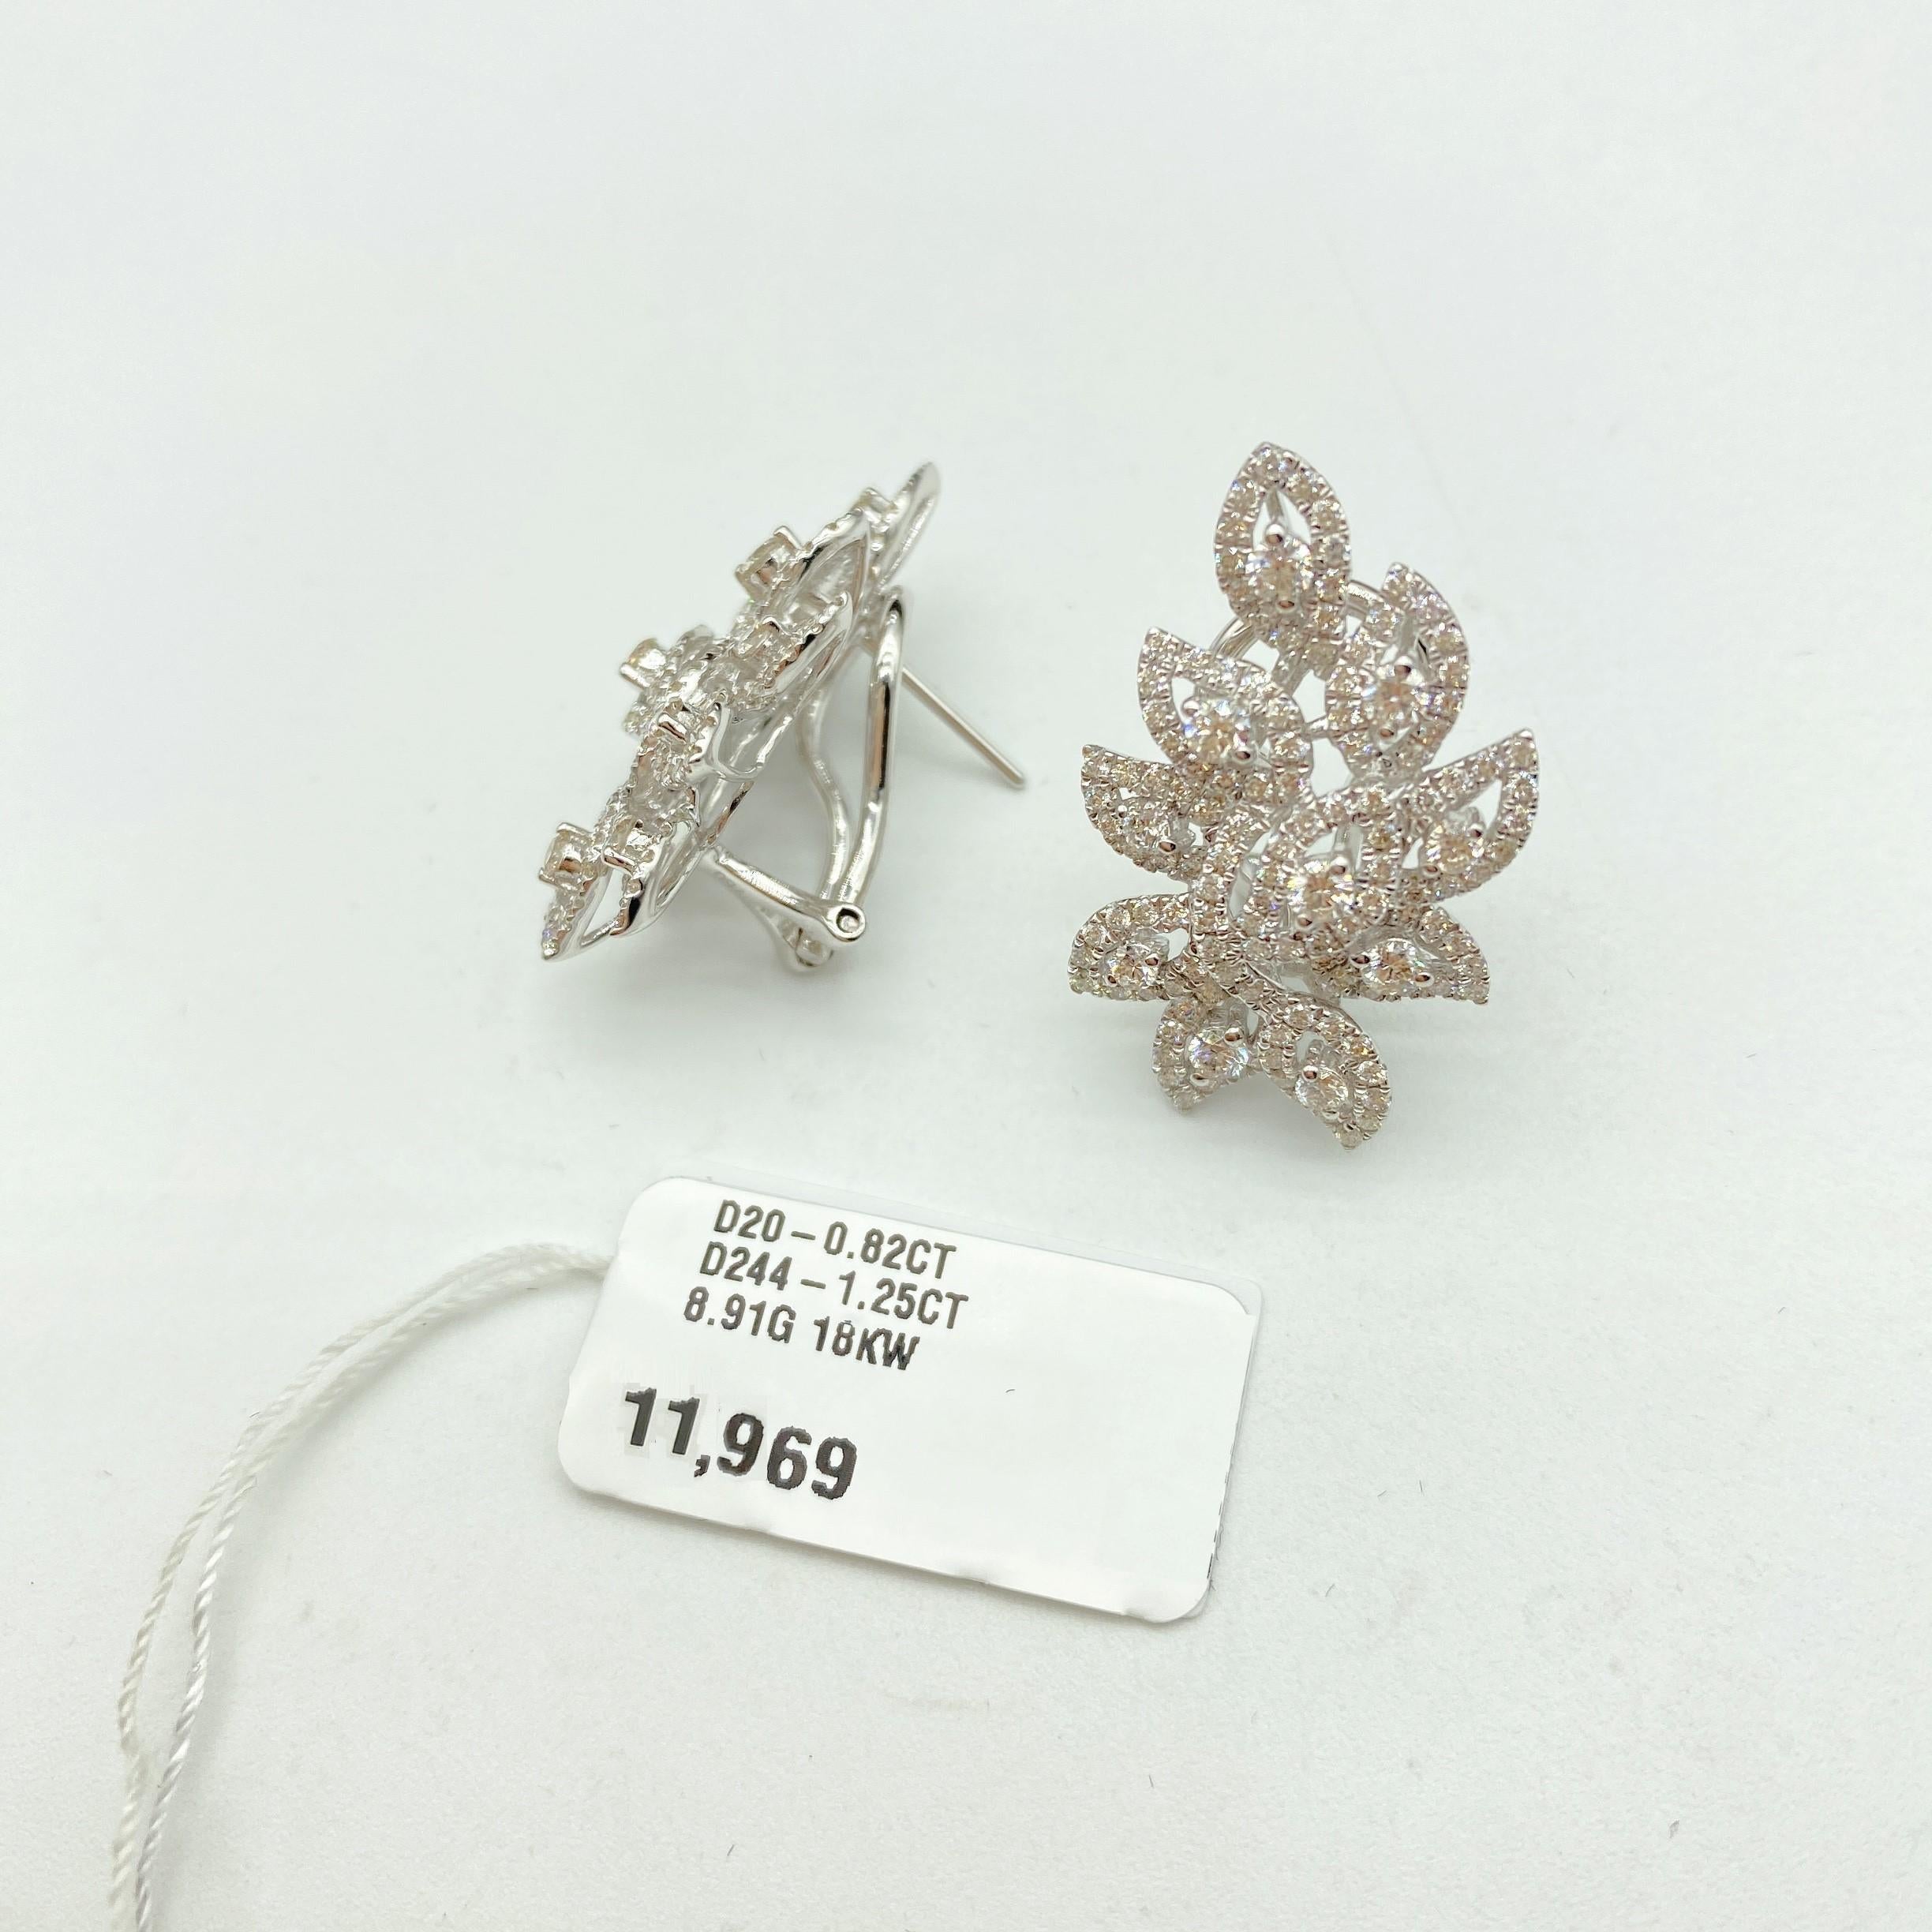 NWT $11,969 Or 18KT Rare Fancy Gorgeous Glittering Leaf Diamond Earrings (Boucles d'oreilles en diamant feuille scintillante) Neuf - En vente à New York, NY